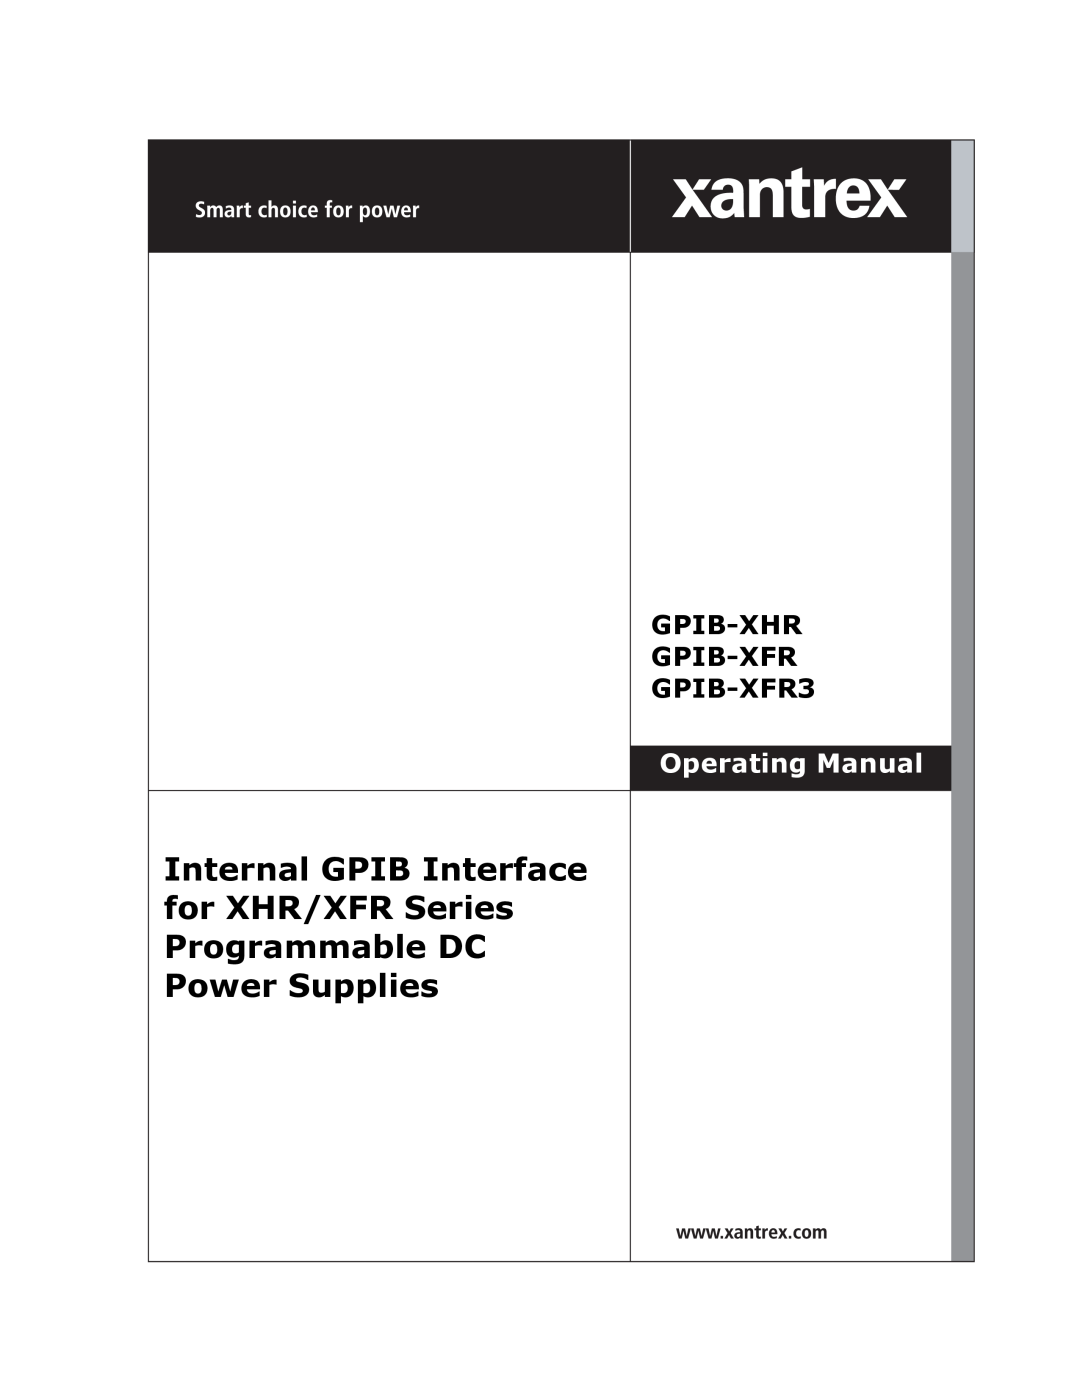 Xantrex Technology XHR, XFR, XFR3 manual GPIB-XHR GPIB-XFR GPIB-XFR3, Operating Manual 